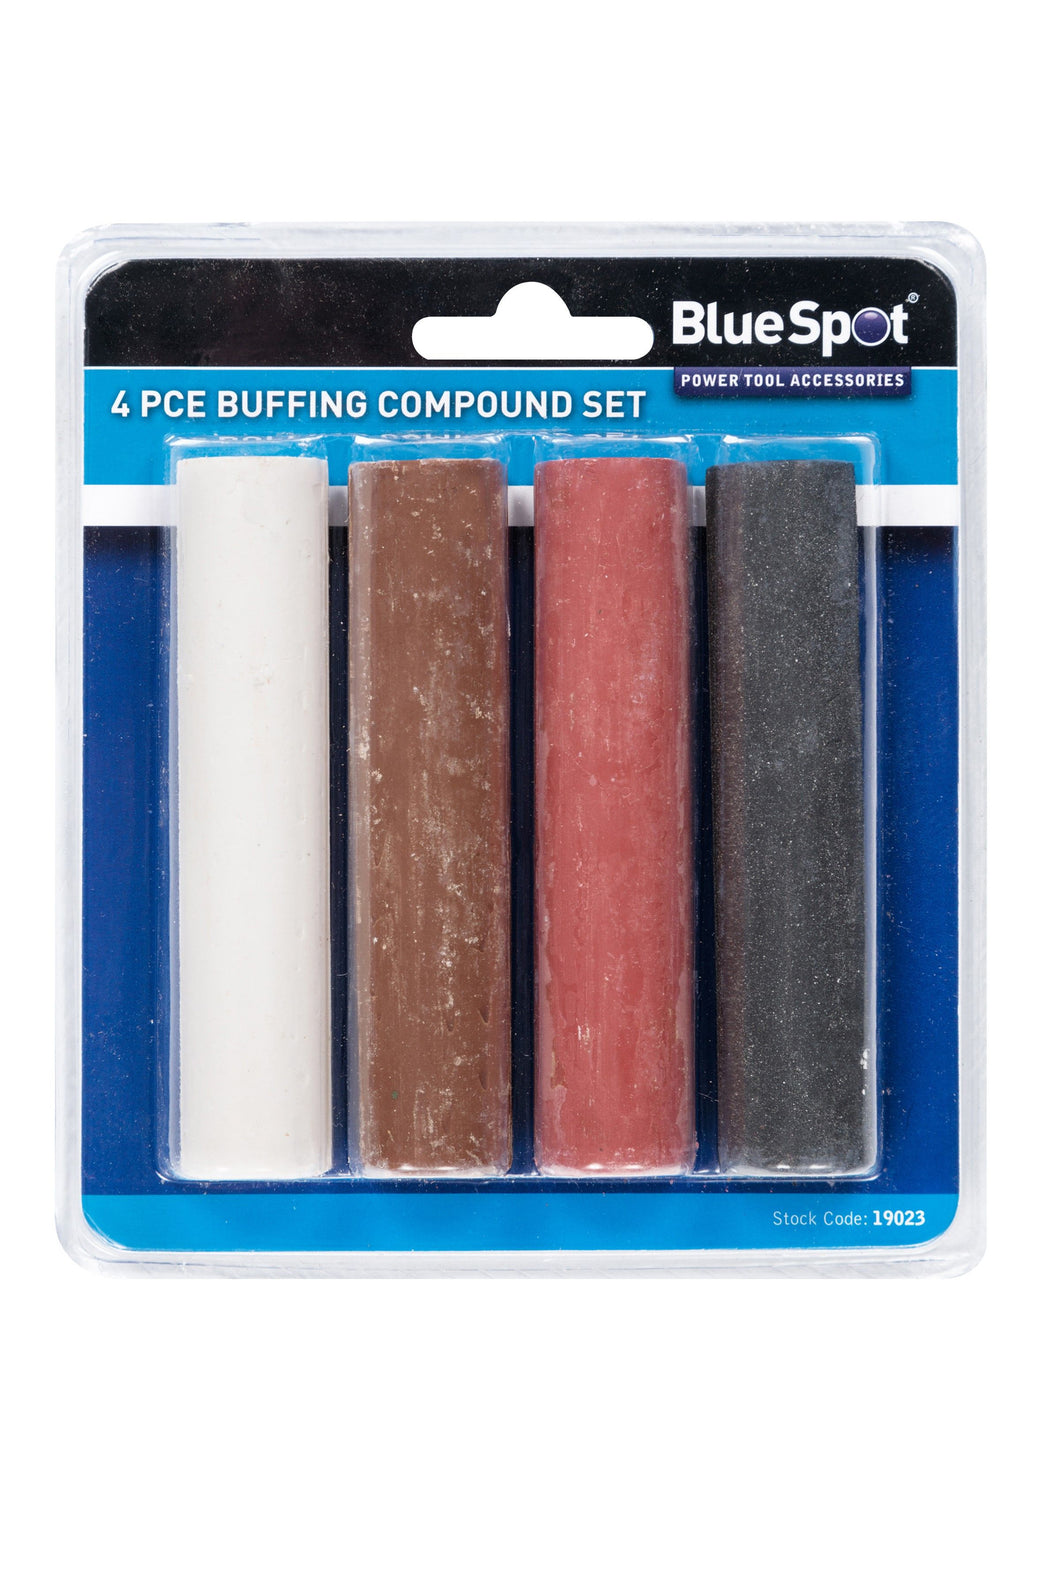 Blue Spot 4 Piece Buffing Compound Set